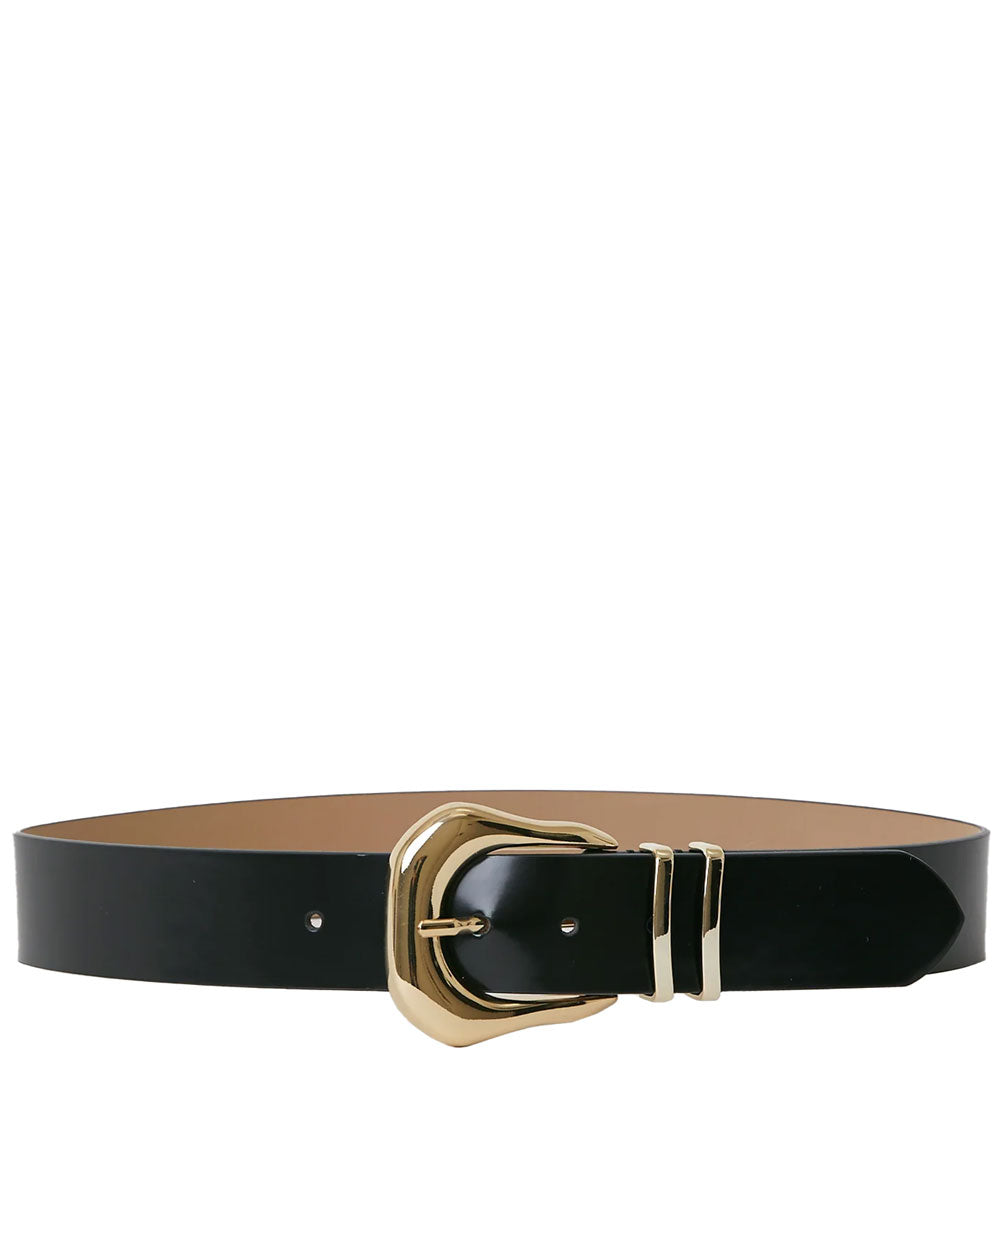 B-Low the Belt Koda Mod Leather Belt in Black and Gold – Stanley Korshak